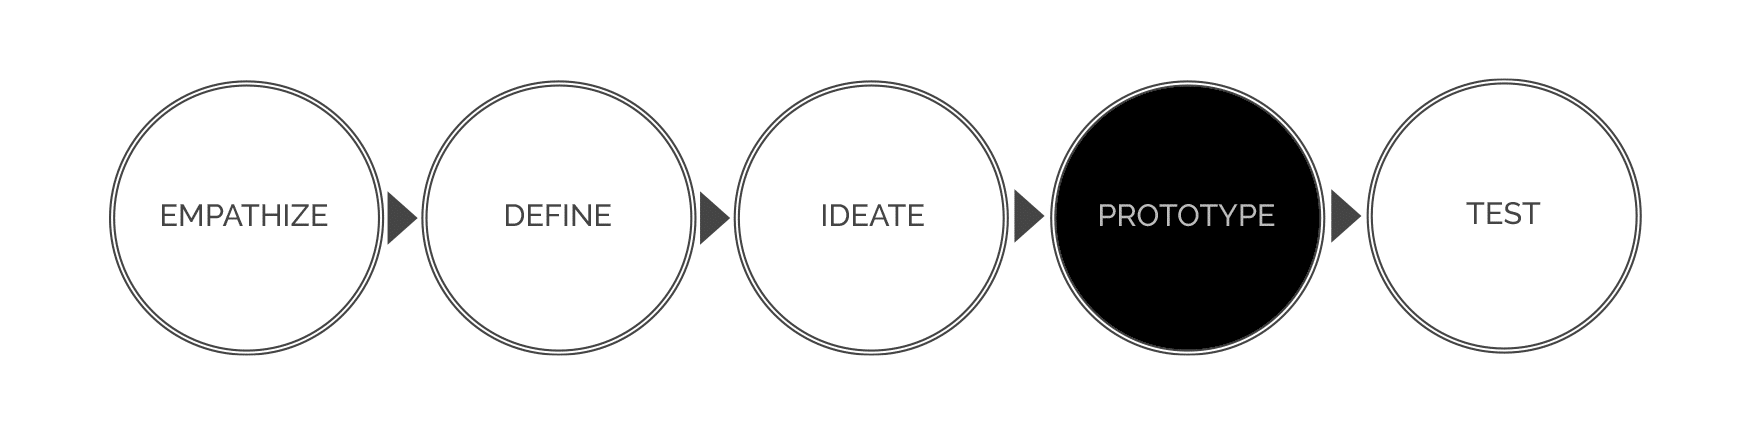 Stappen Design Thinking methode Empathize, Define, Ideate, PROTOTYPE, test